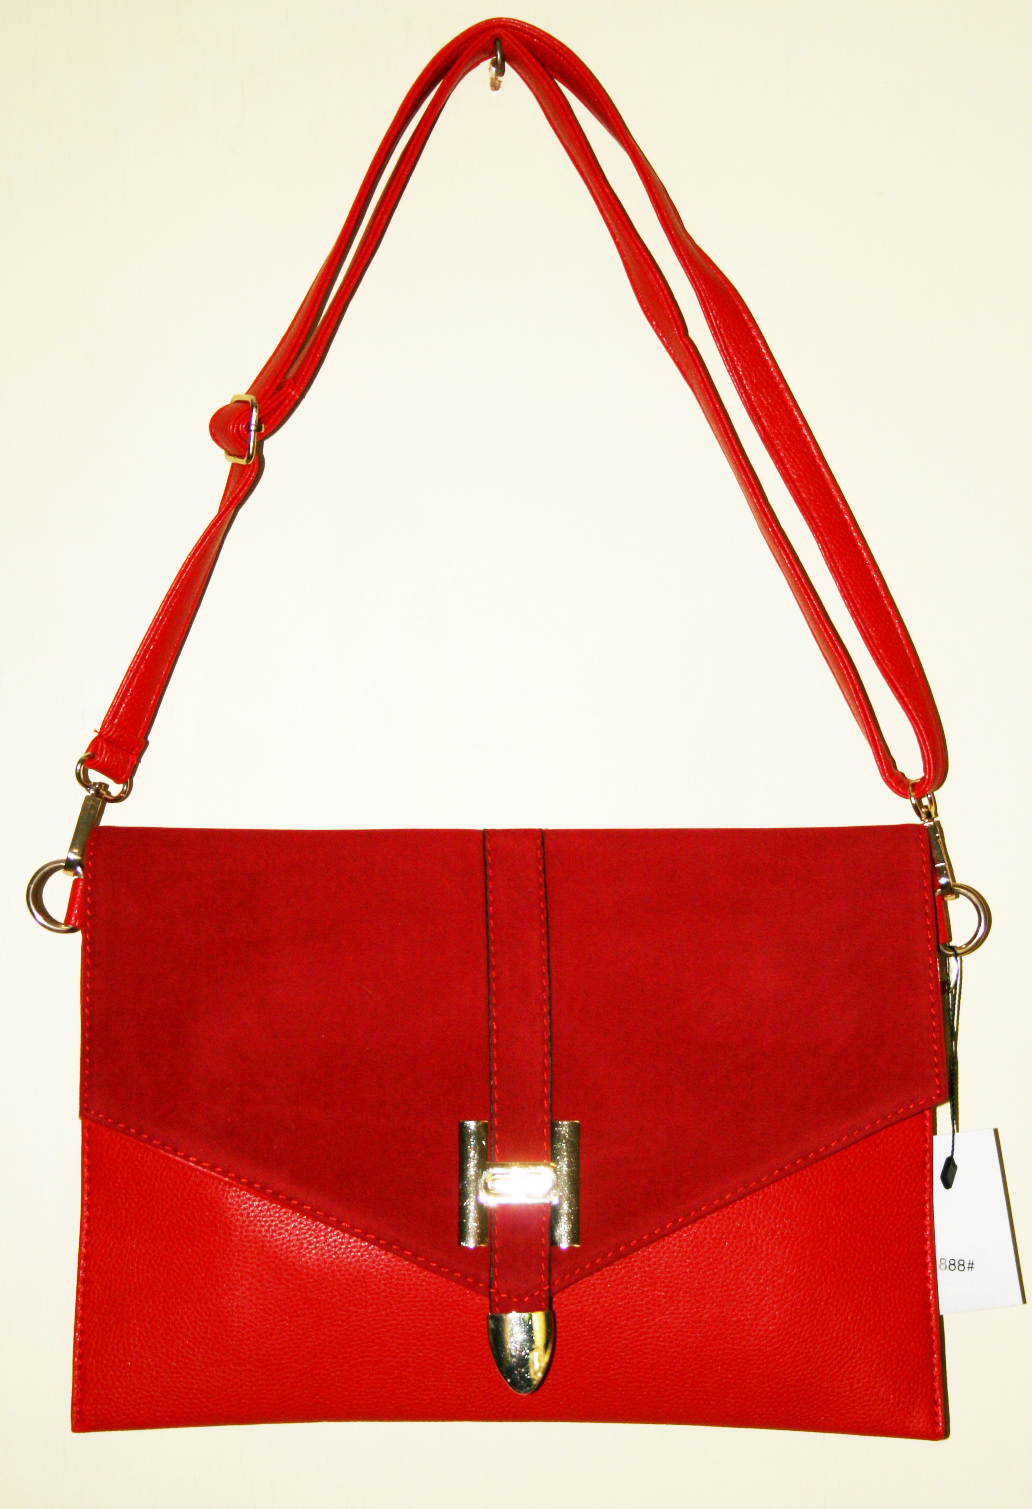 identi boutique: Handbag 888